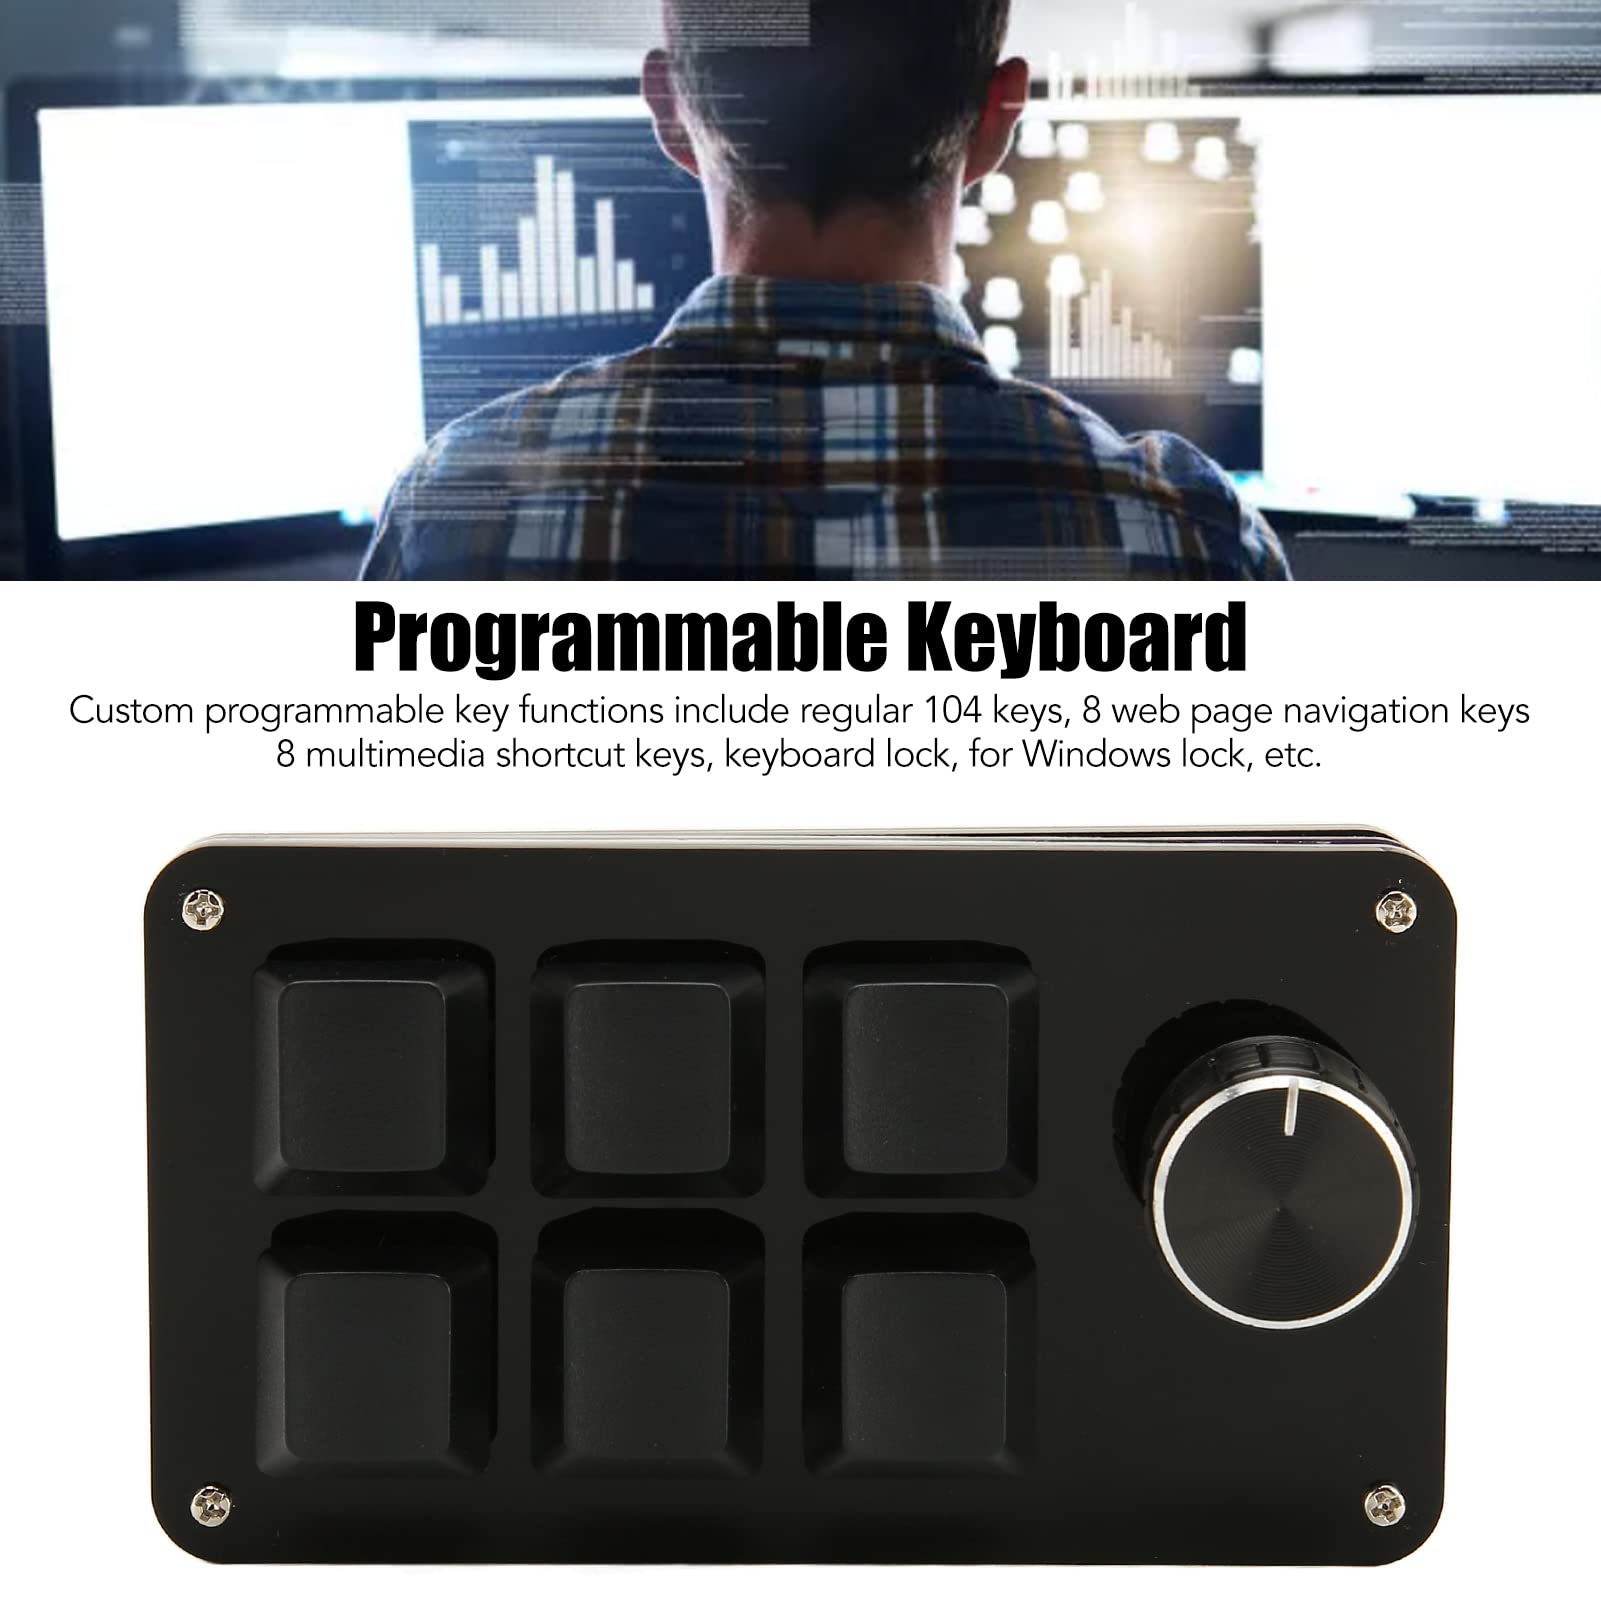 Luqeeg 6 Key Mini Keypad with Knob, USB DIY Programmable Keyboard, One Handed Macro Mechanical Keyboard, RGB Backlight OSU Gaming Keyboard for Office, Gaming, Music, Media, Laboratory